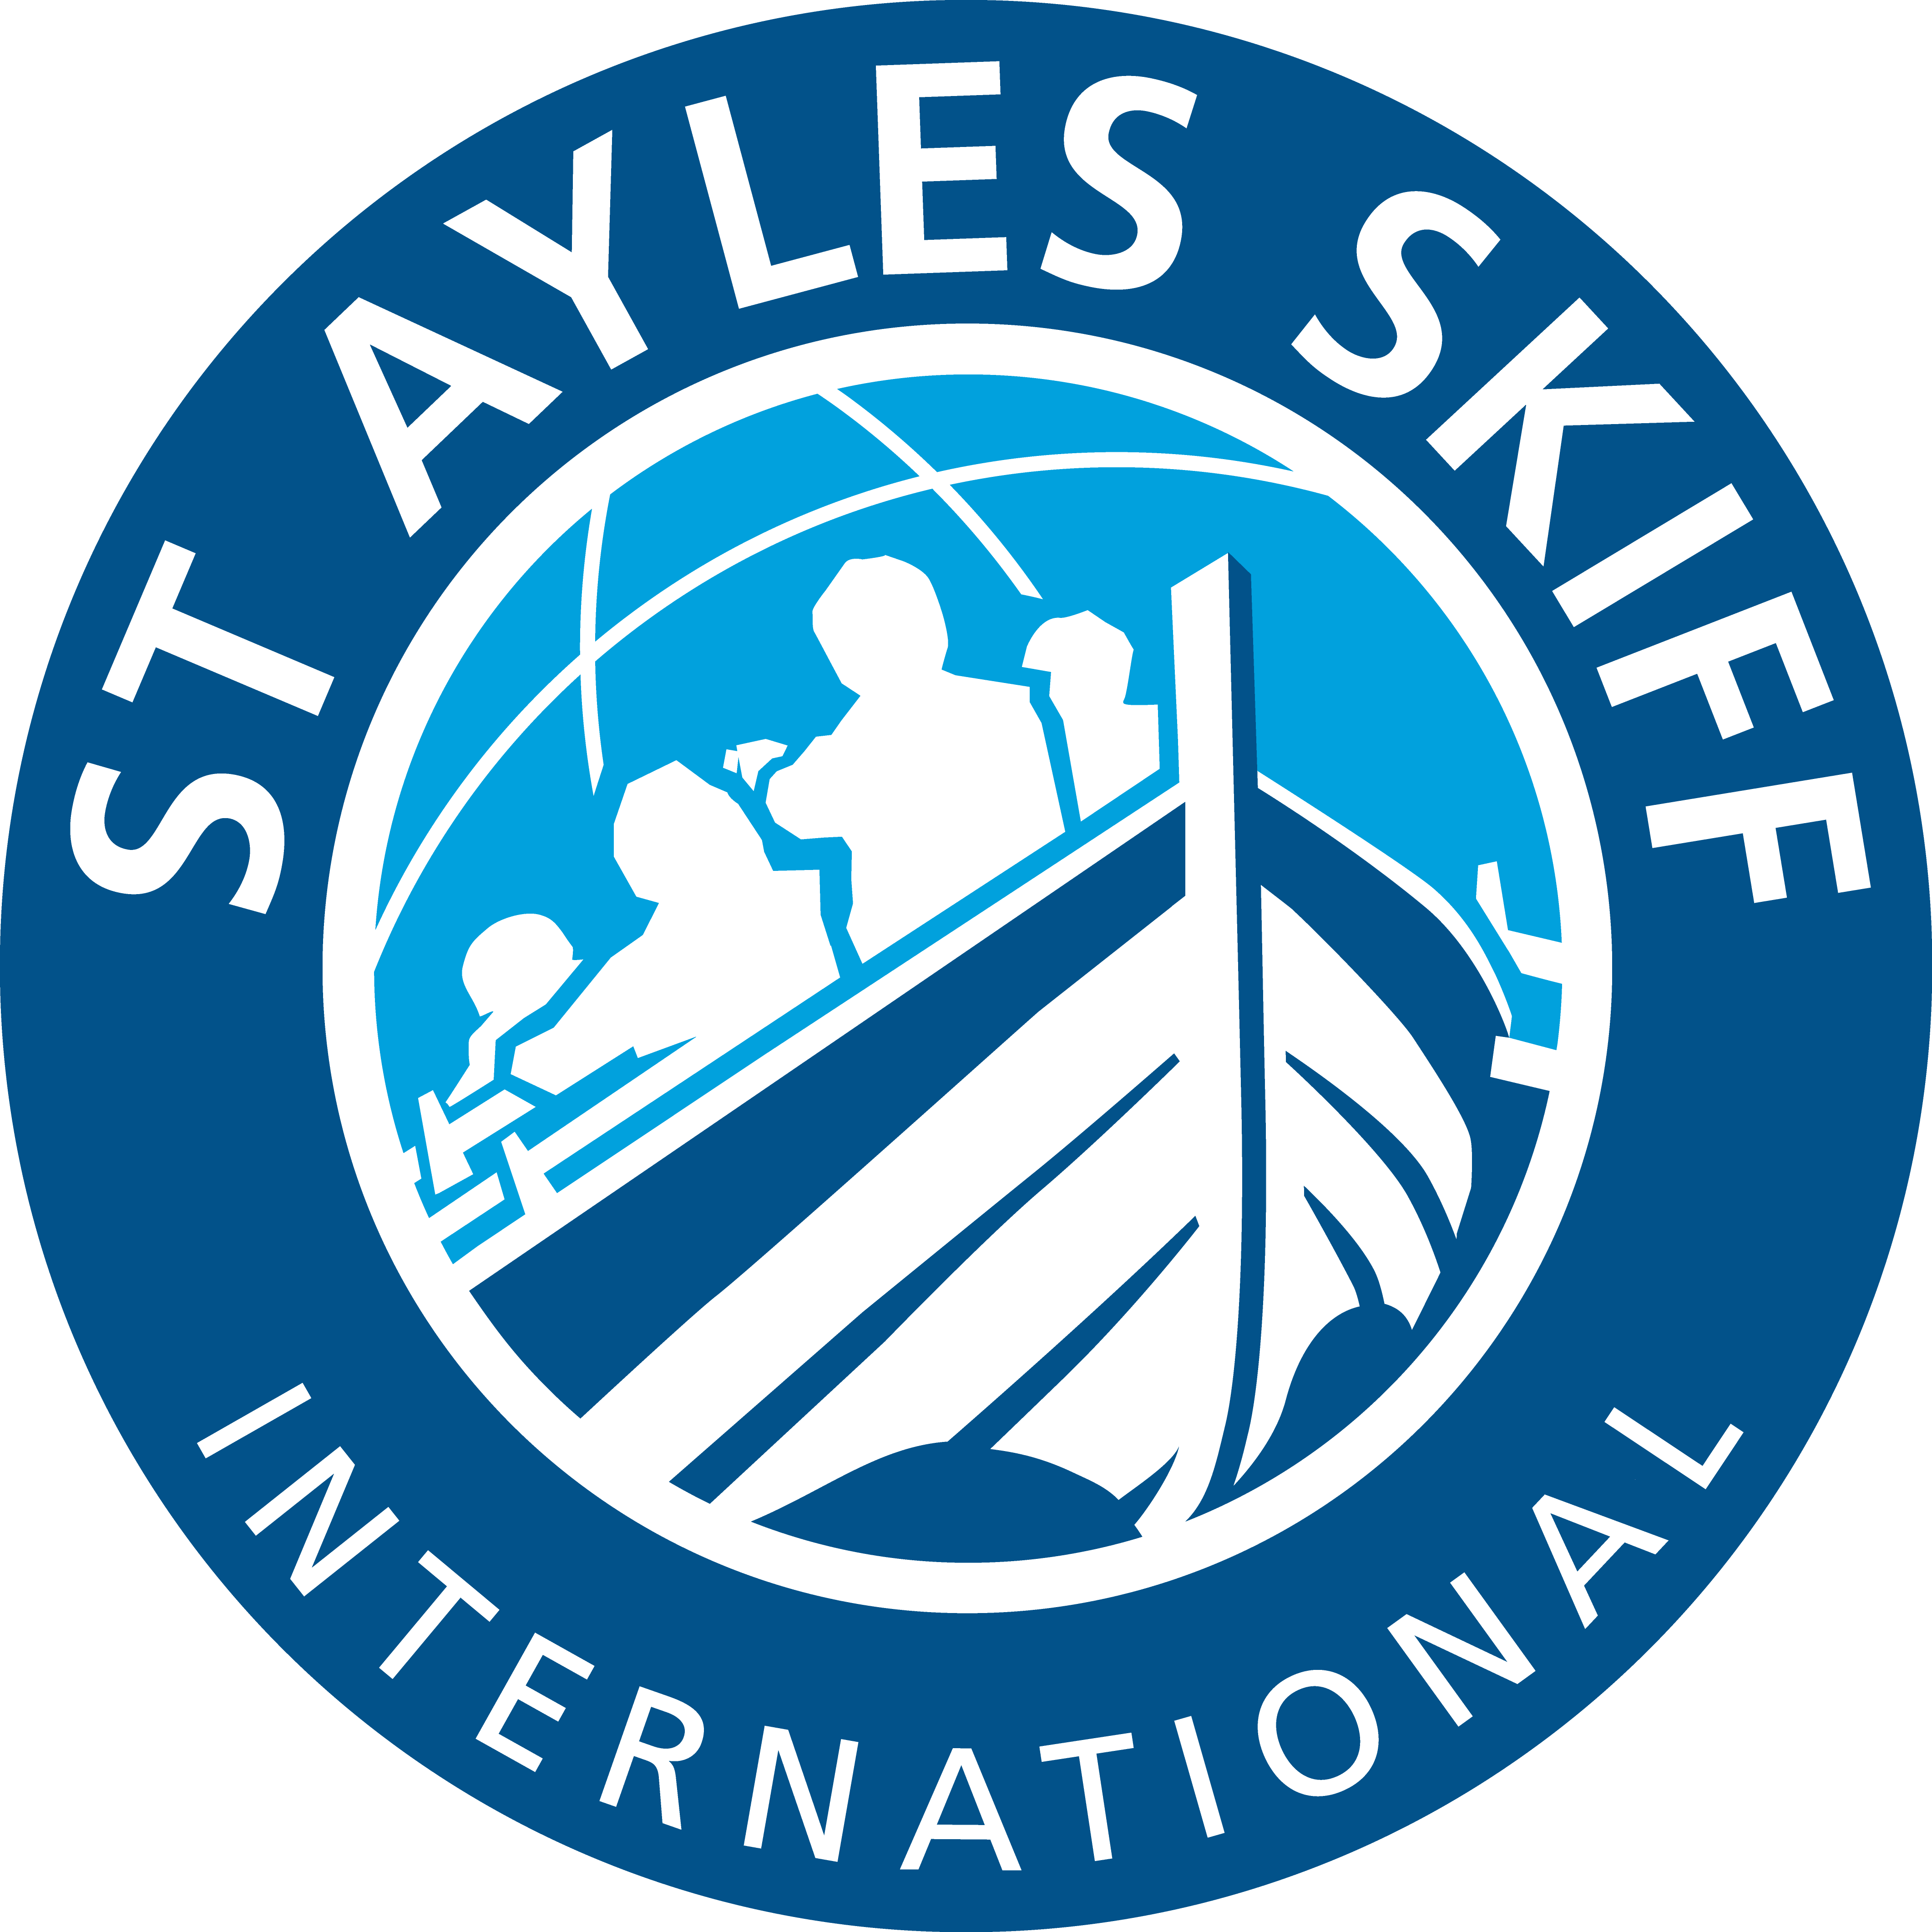 St Ayles Skiff International